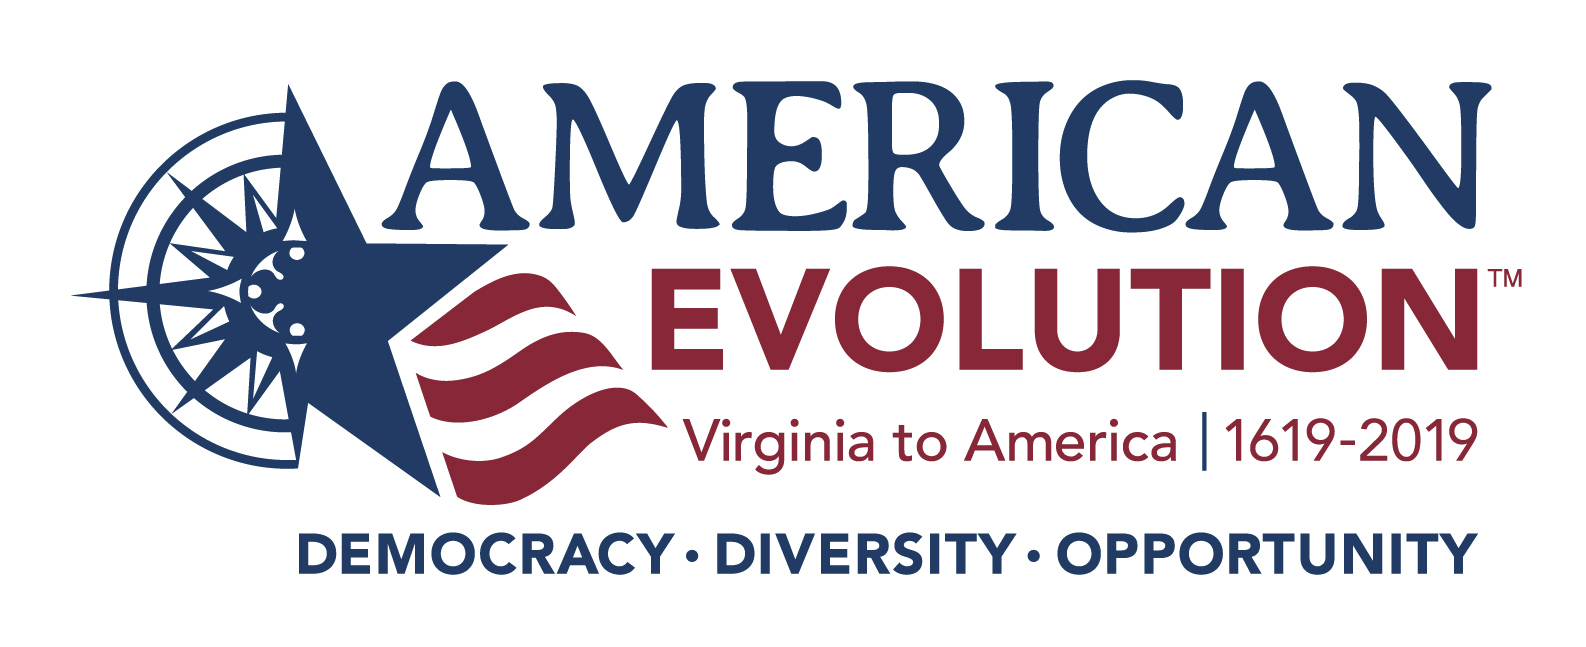 American Evolution 2019 logo